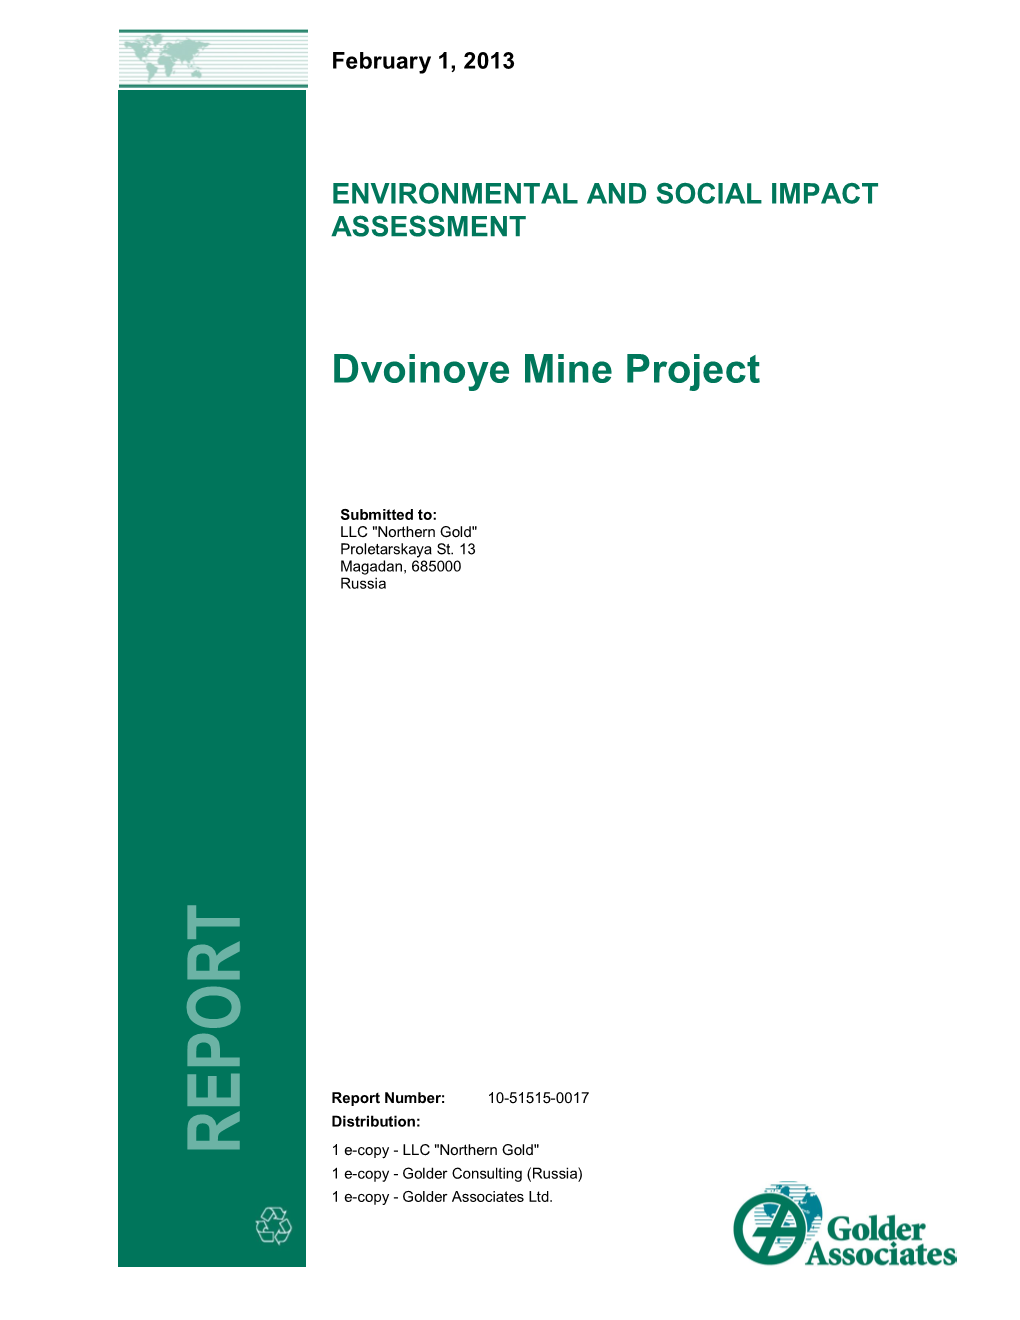 ENVIRONMENTAL and SOCIAL IMPACT ASSESSMENT Dvoinoye Mine Project REPO RT